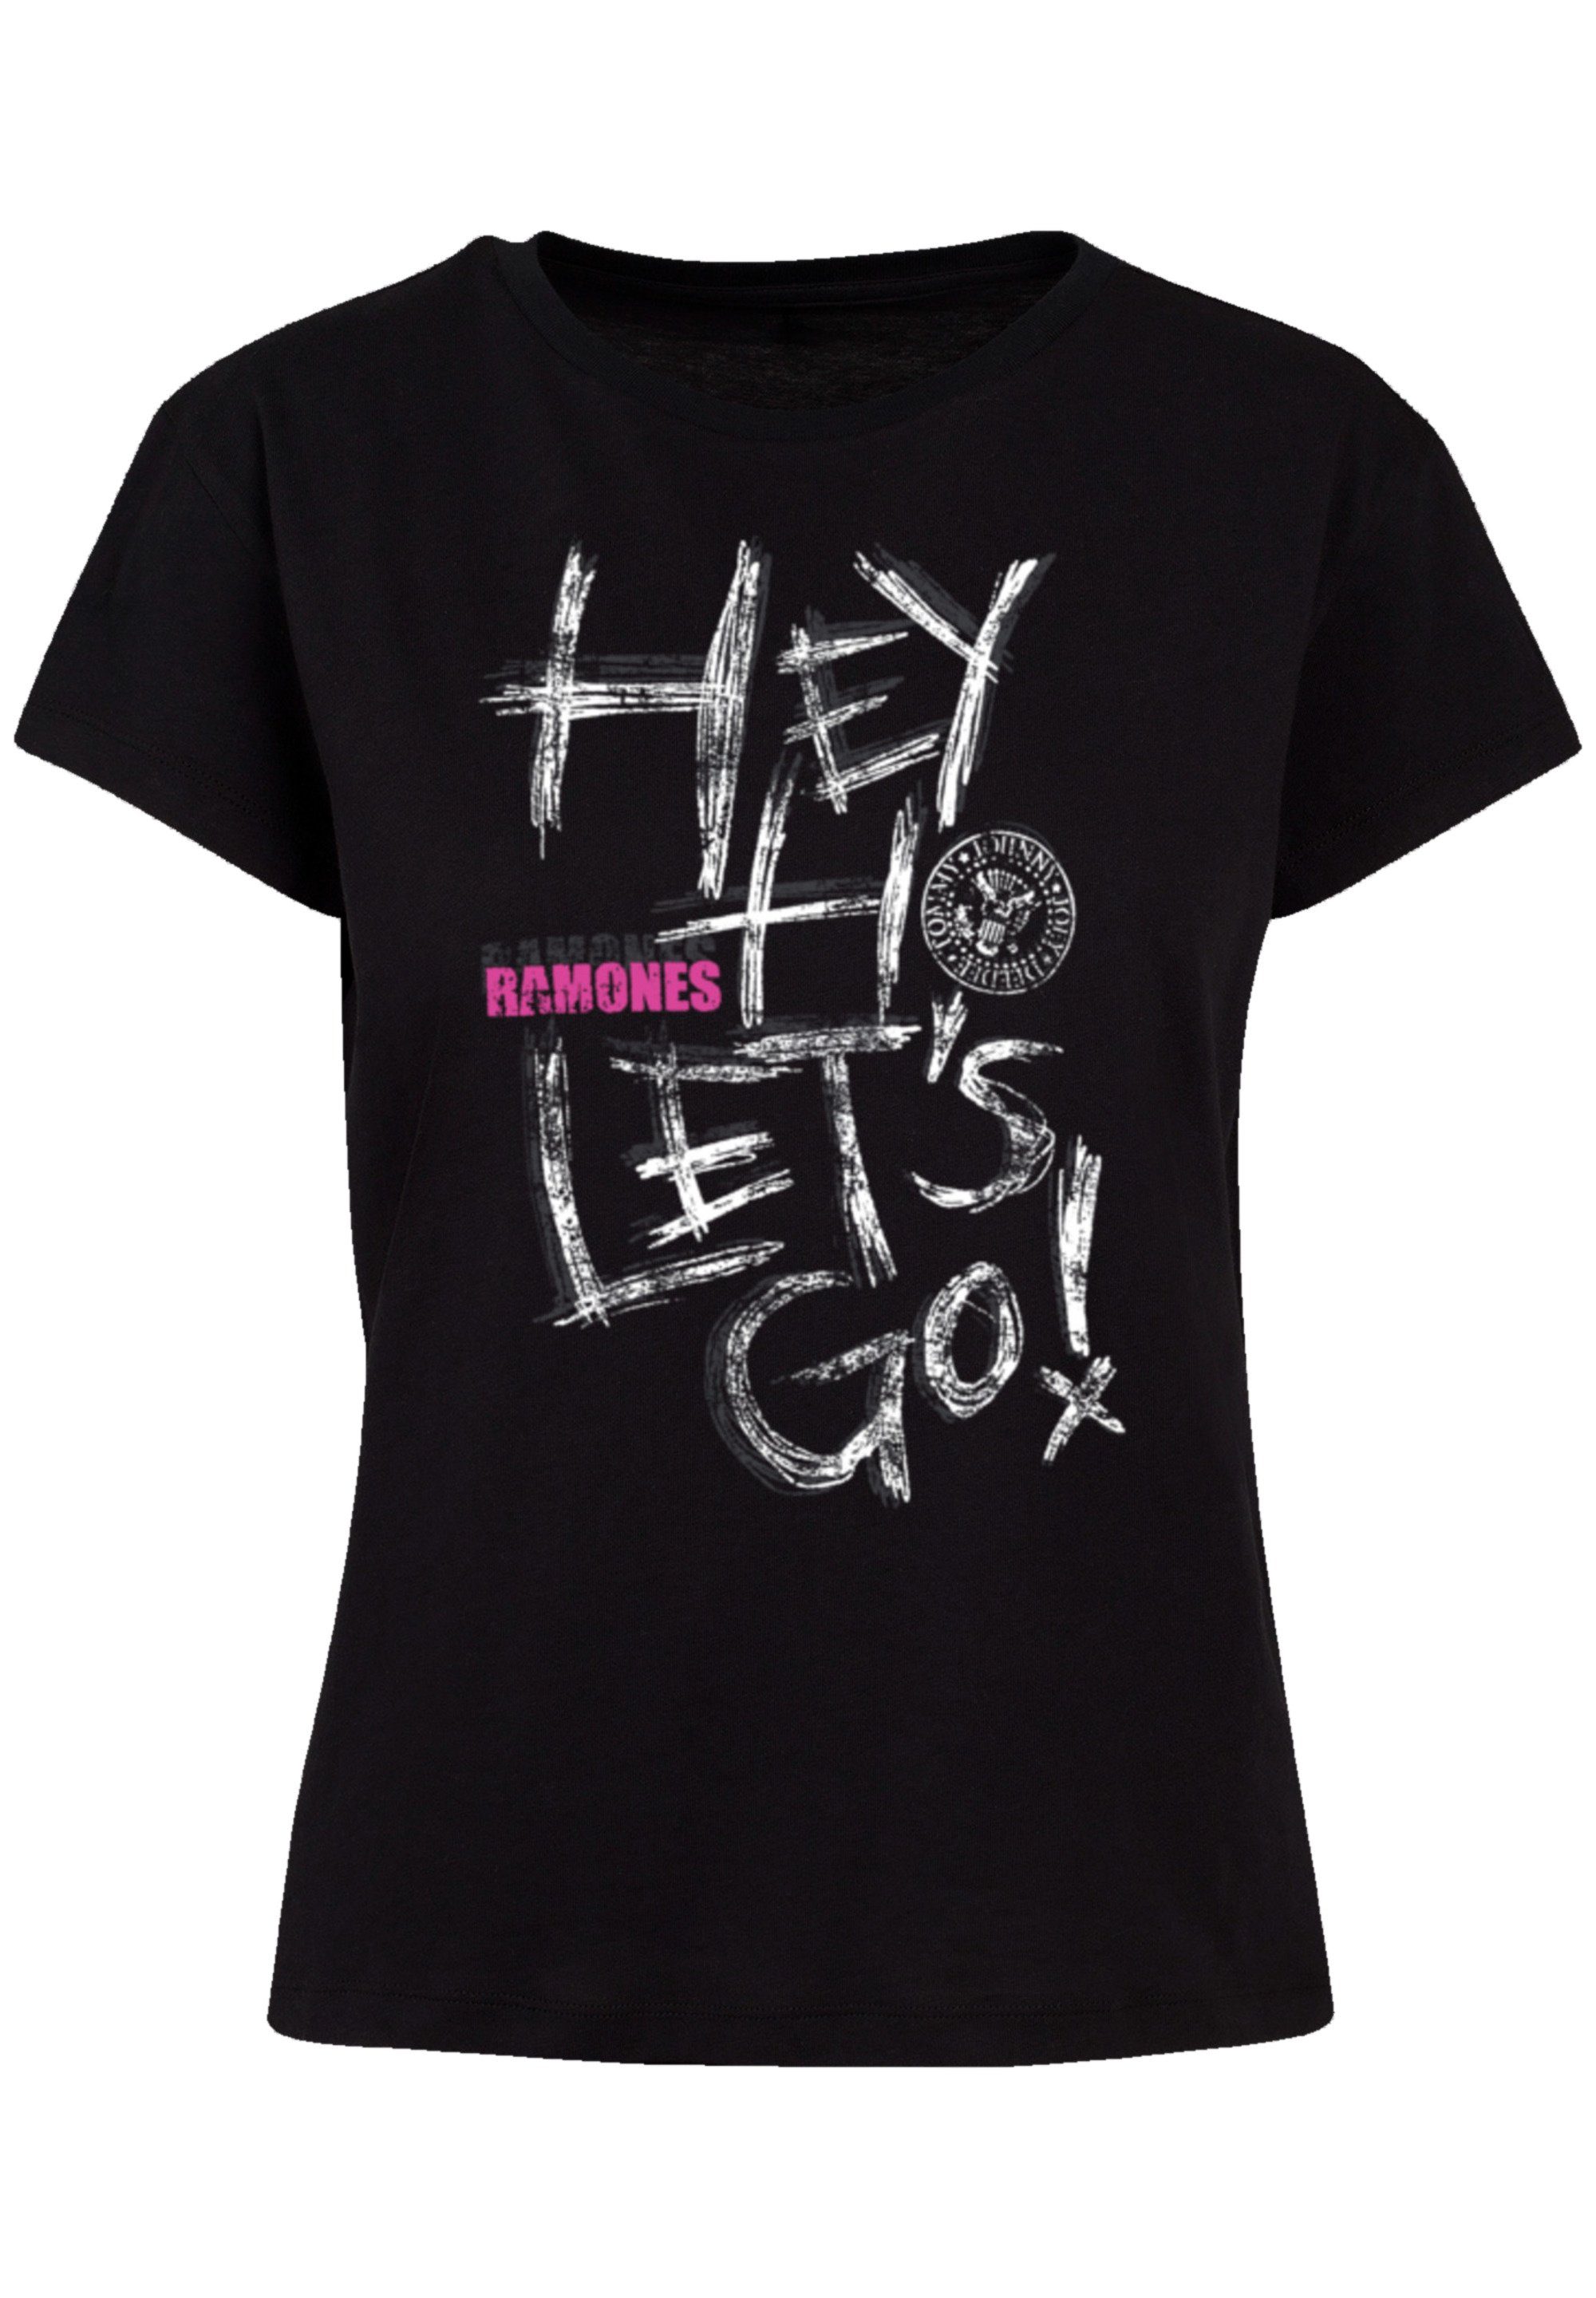 Hey Go T-Shirt Band Qualität, Rock Ho Band, Let's Musik Premium Rock-Musik F4NT4STIC Ramones